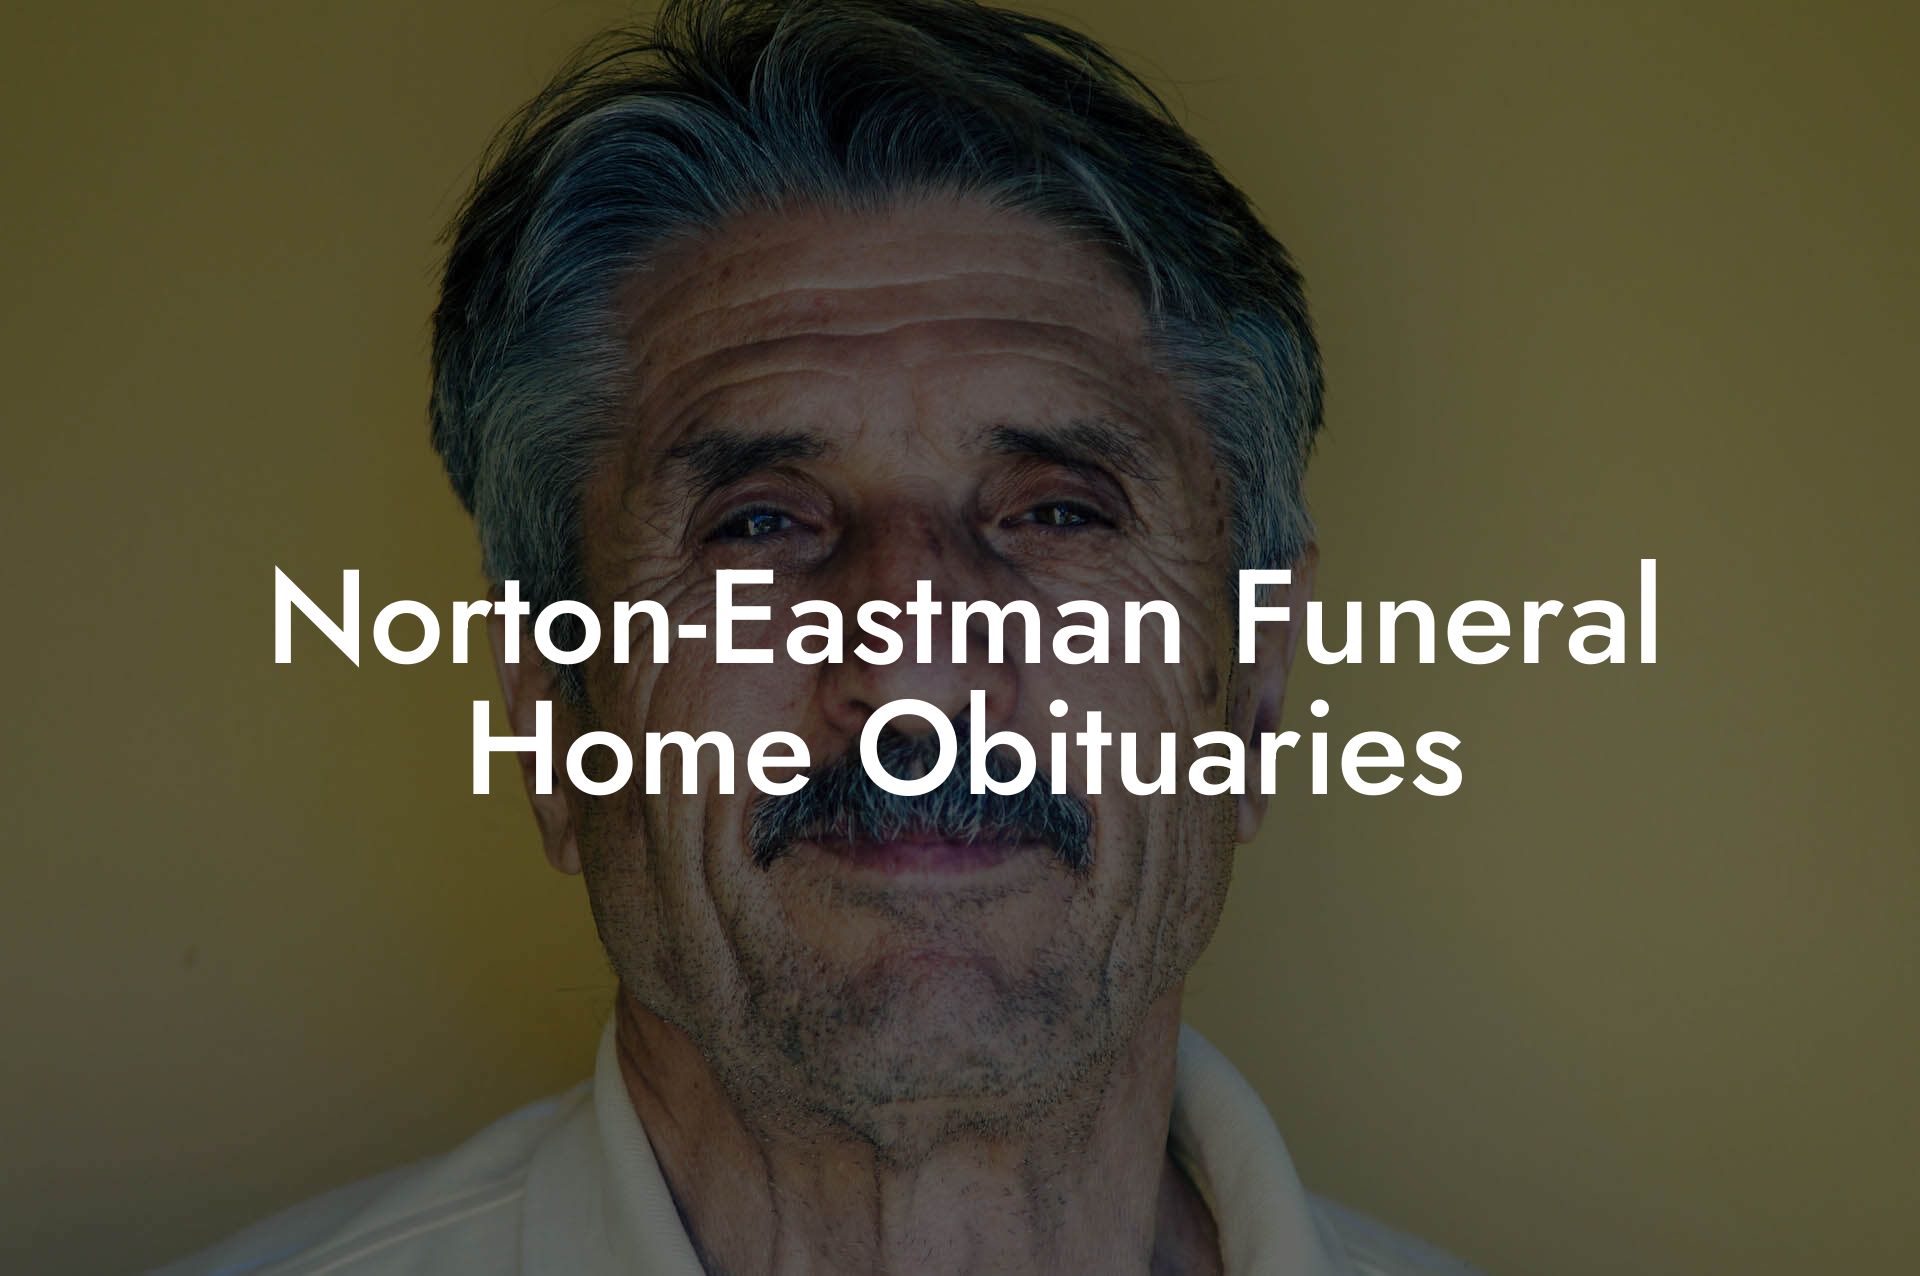 Norton-Eastman Funeral Home Obituaries